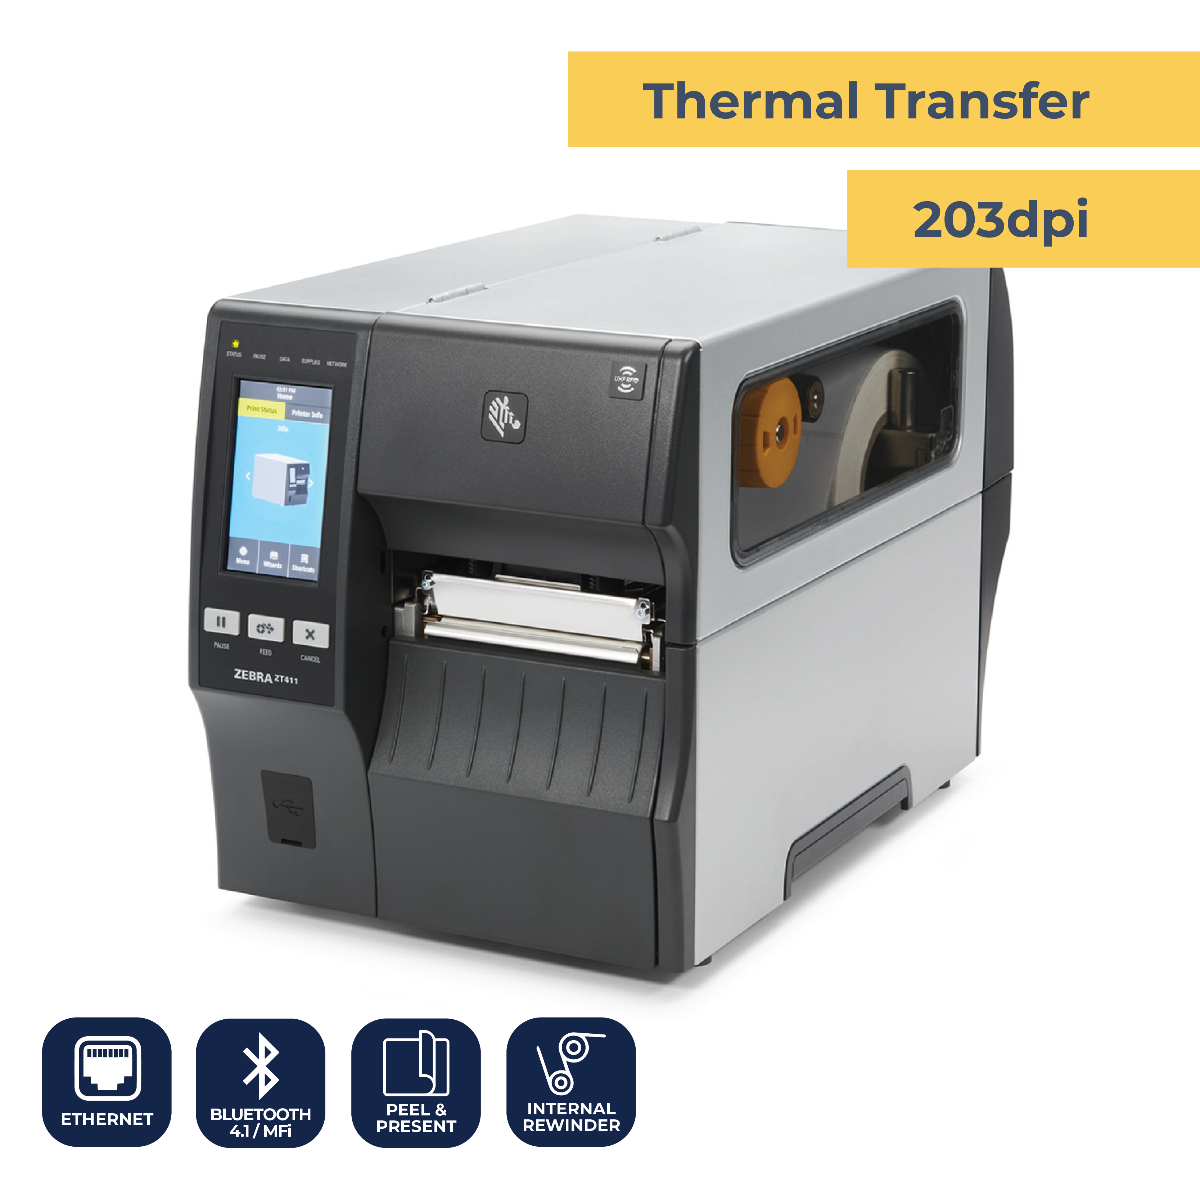 ZT411 Industrial Printer -  TT - 203 dpi -  Peel Present - Internal Rewinder